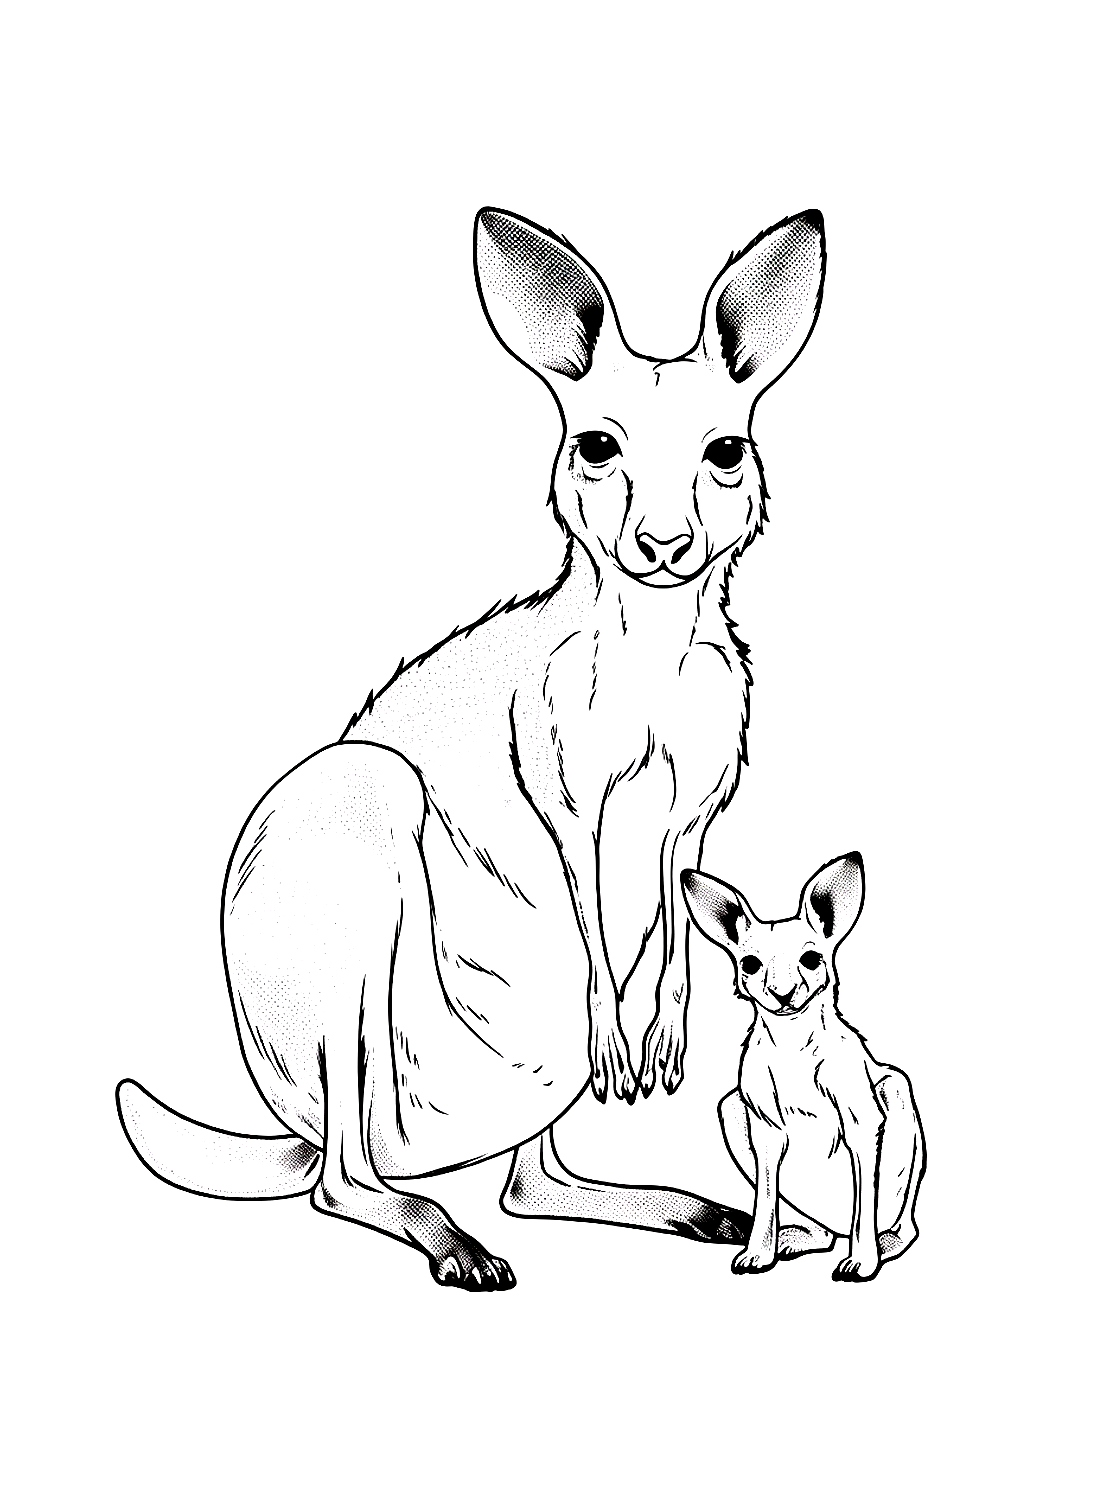 Милый кенгуру и детеныш кенгуру из мультфильма "Кенгуру"